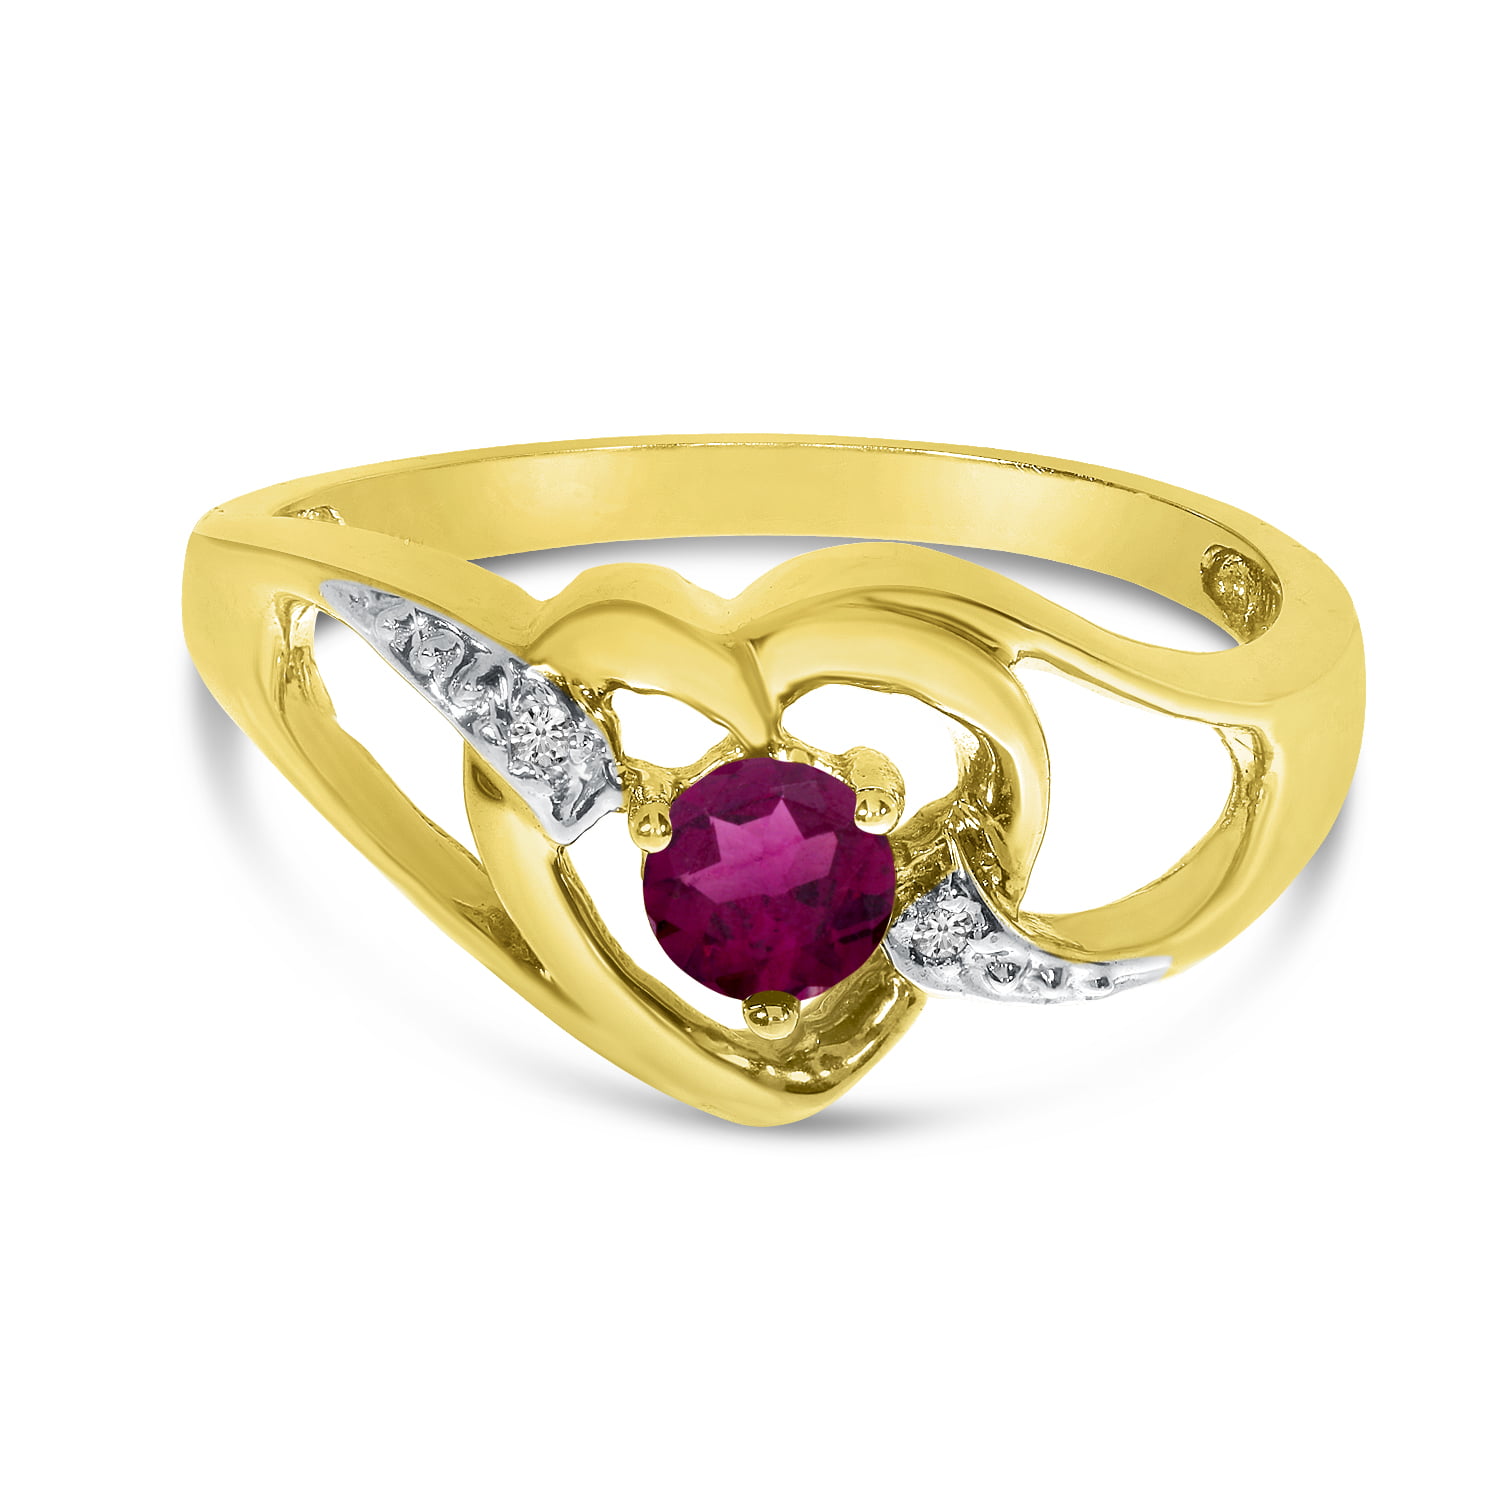 JewelrySuperMart Collection 10k Yellow or White Gold Round Rhodolite Garnet Heart Ring